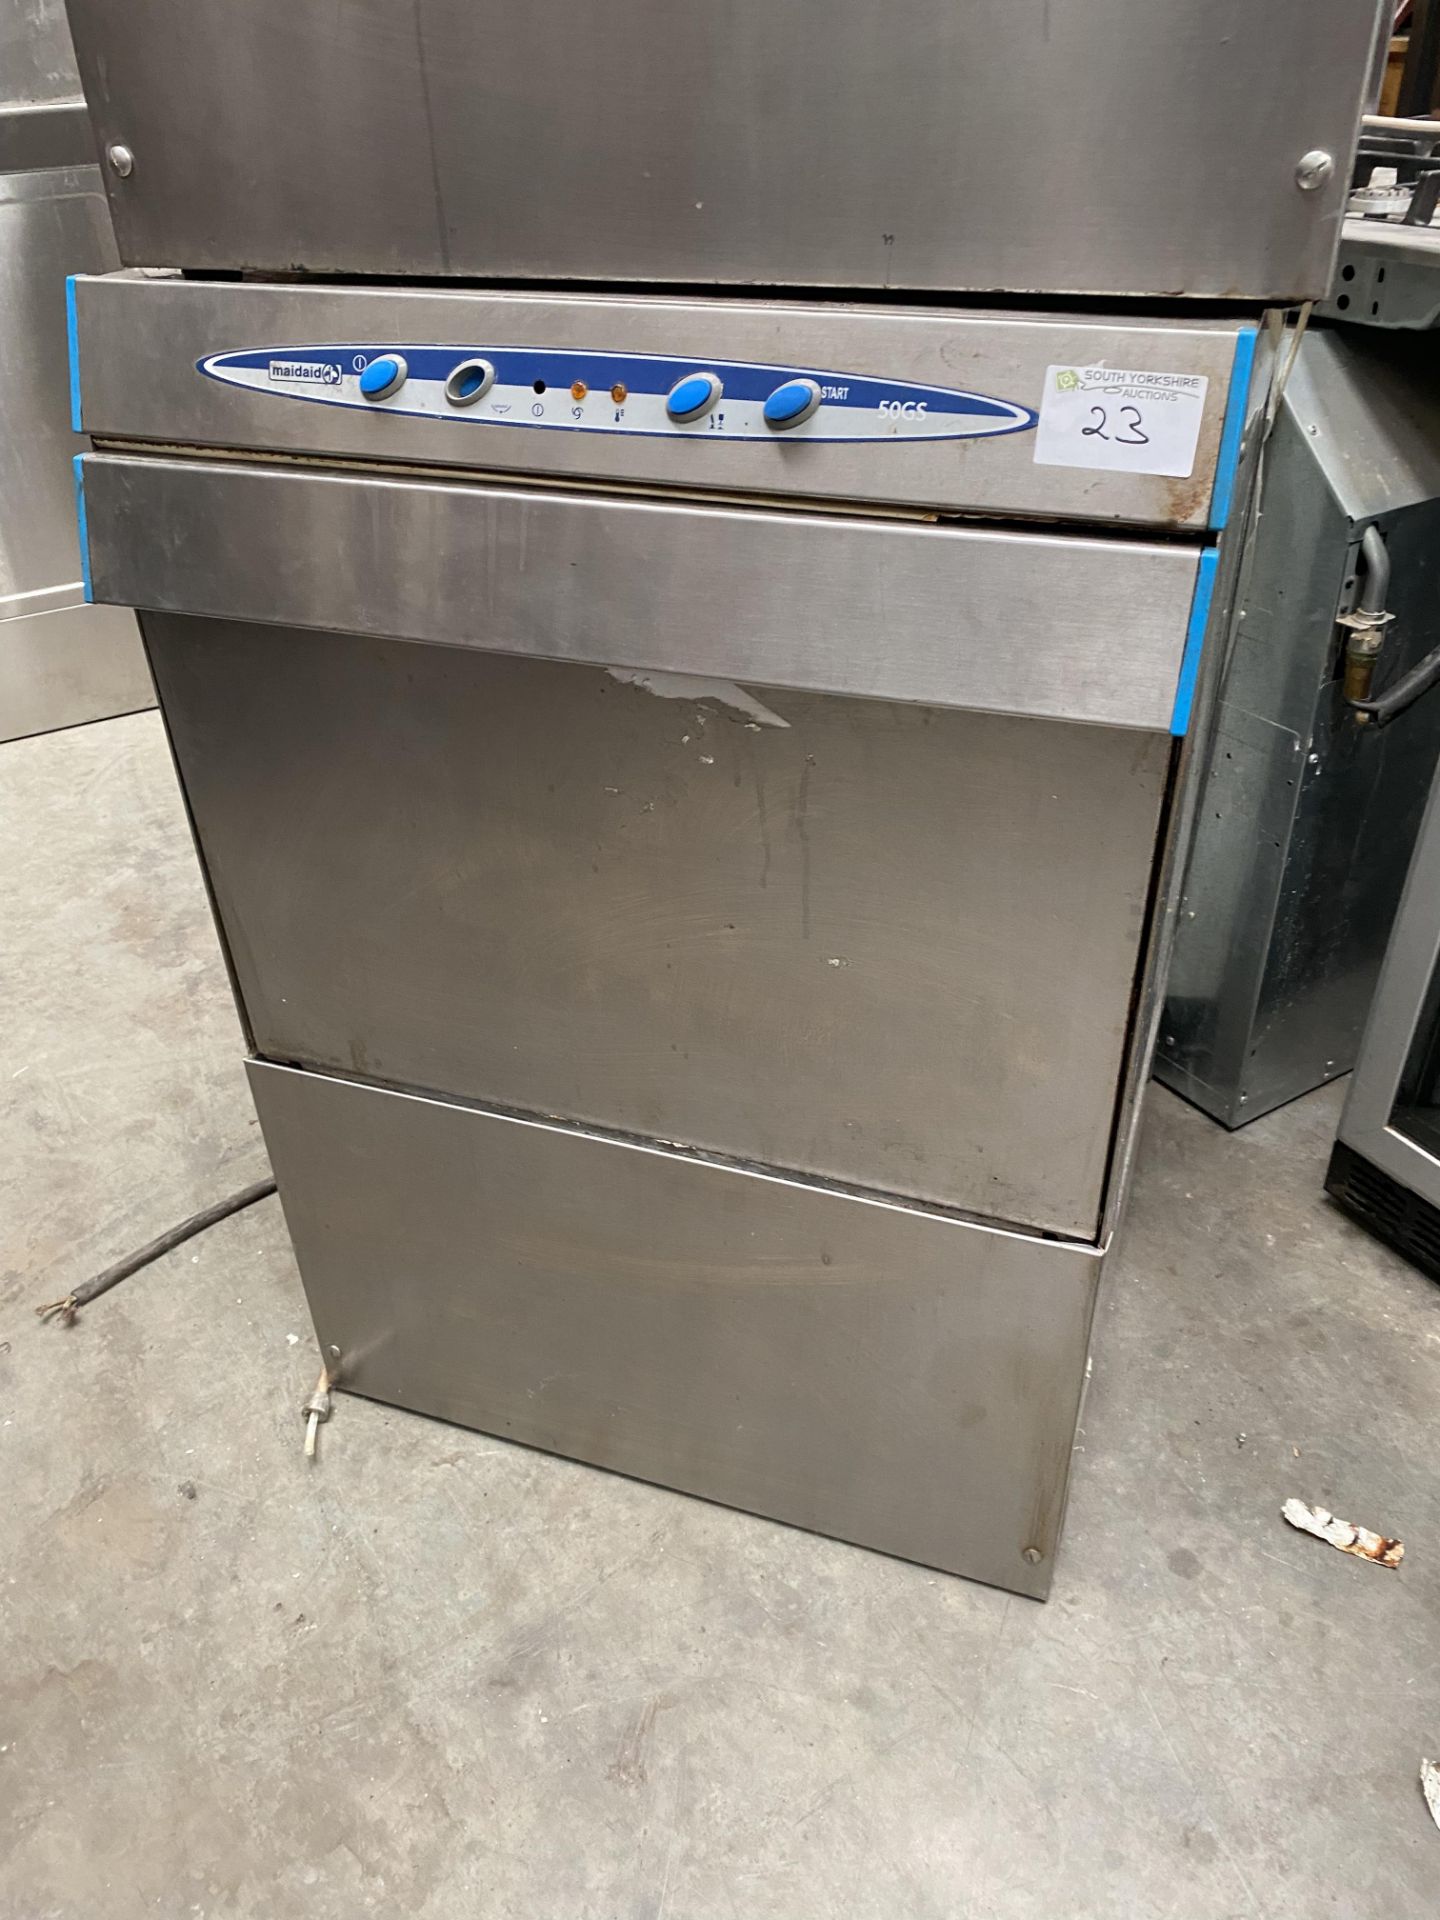 Maidaid GS 50 Undercounter Dishwasher